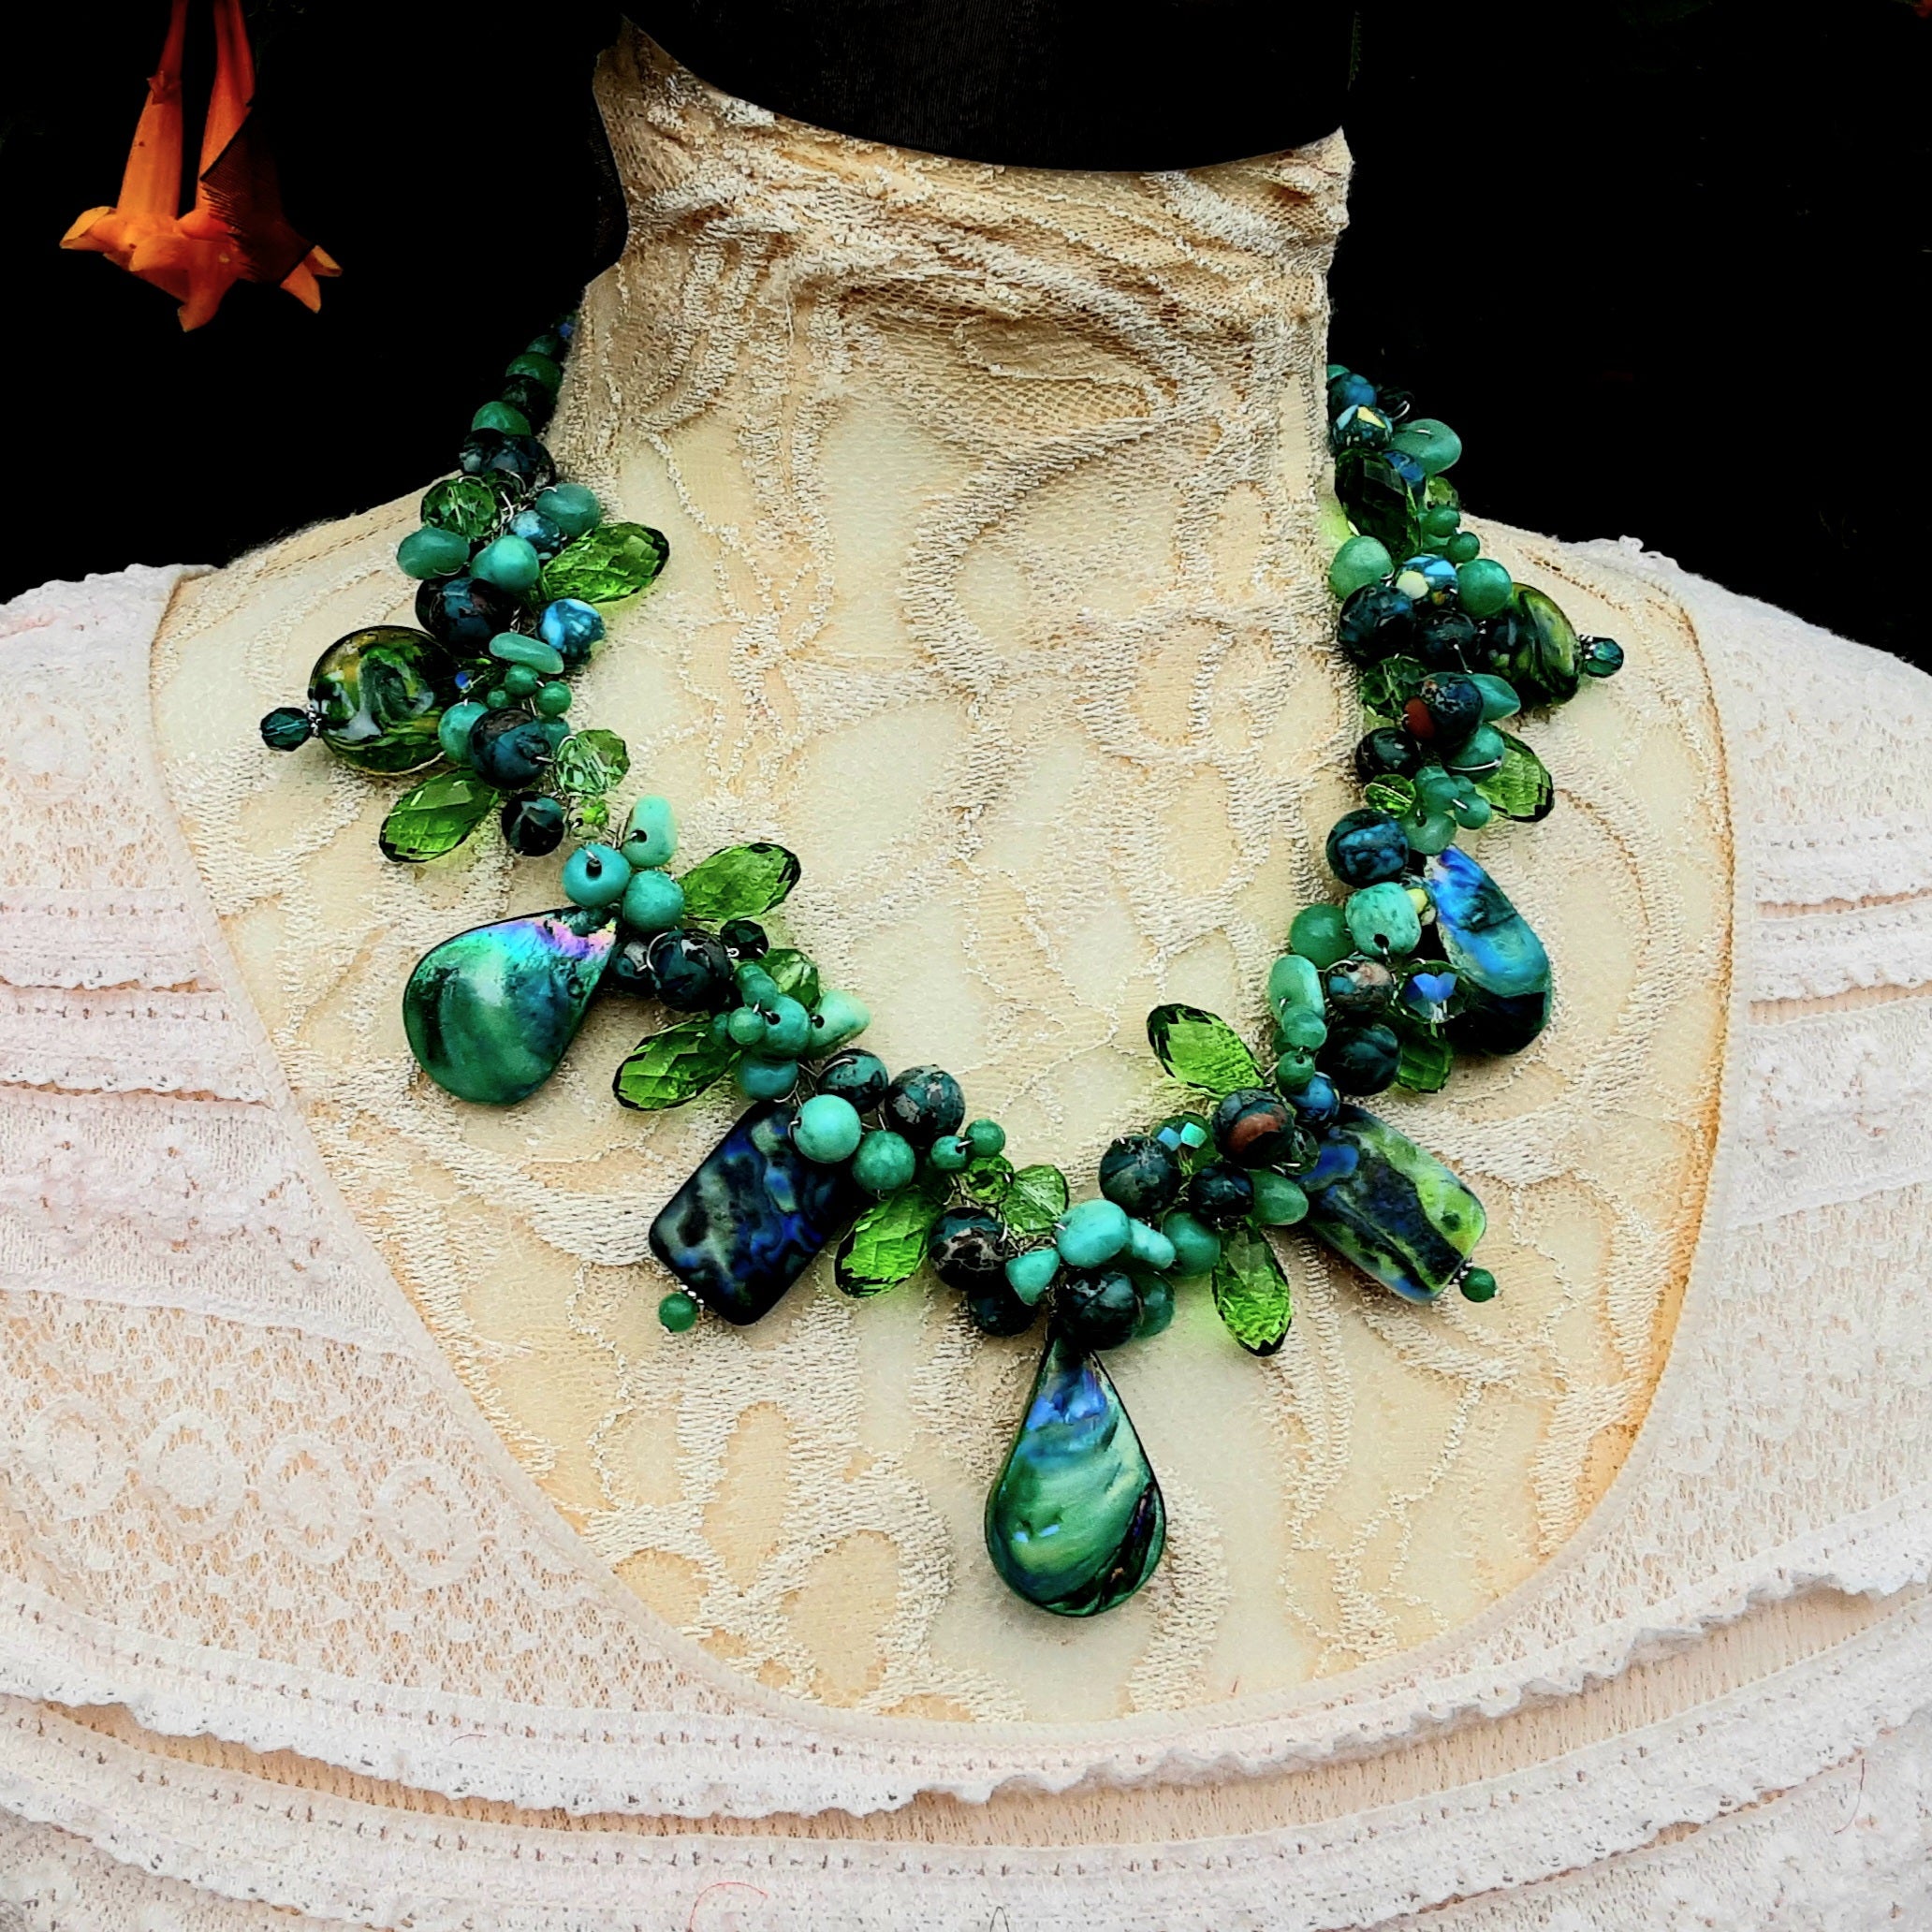 Balinese Handmade Green Beaded Chunky Necklace Jewelry | eBay